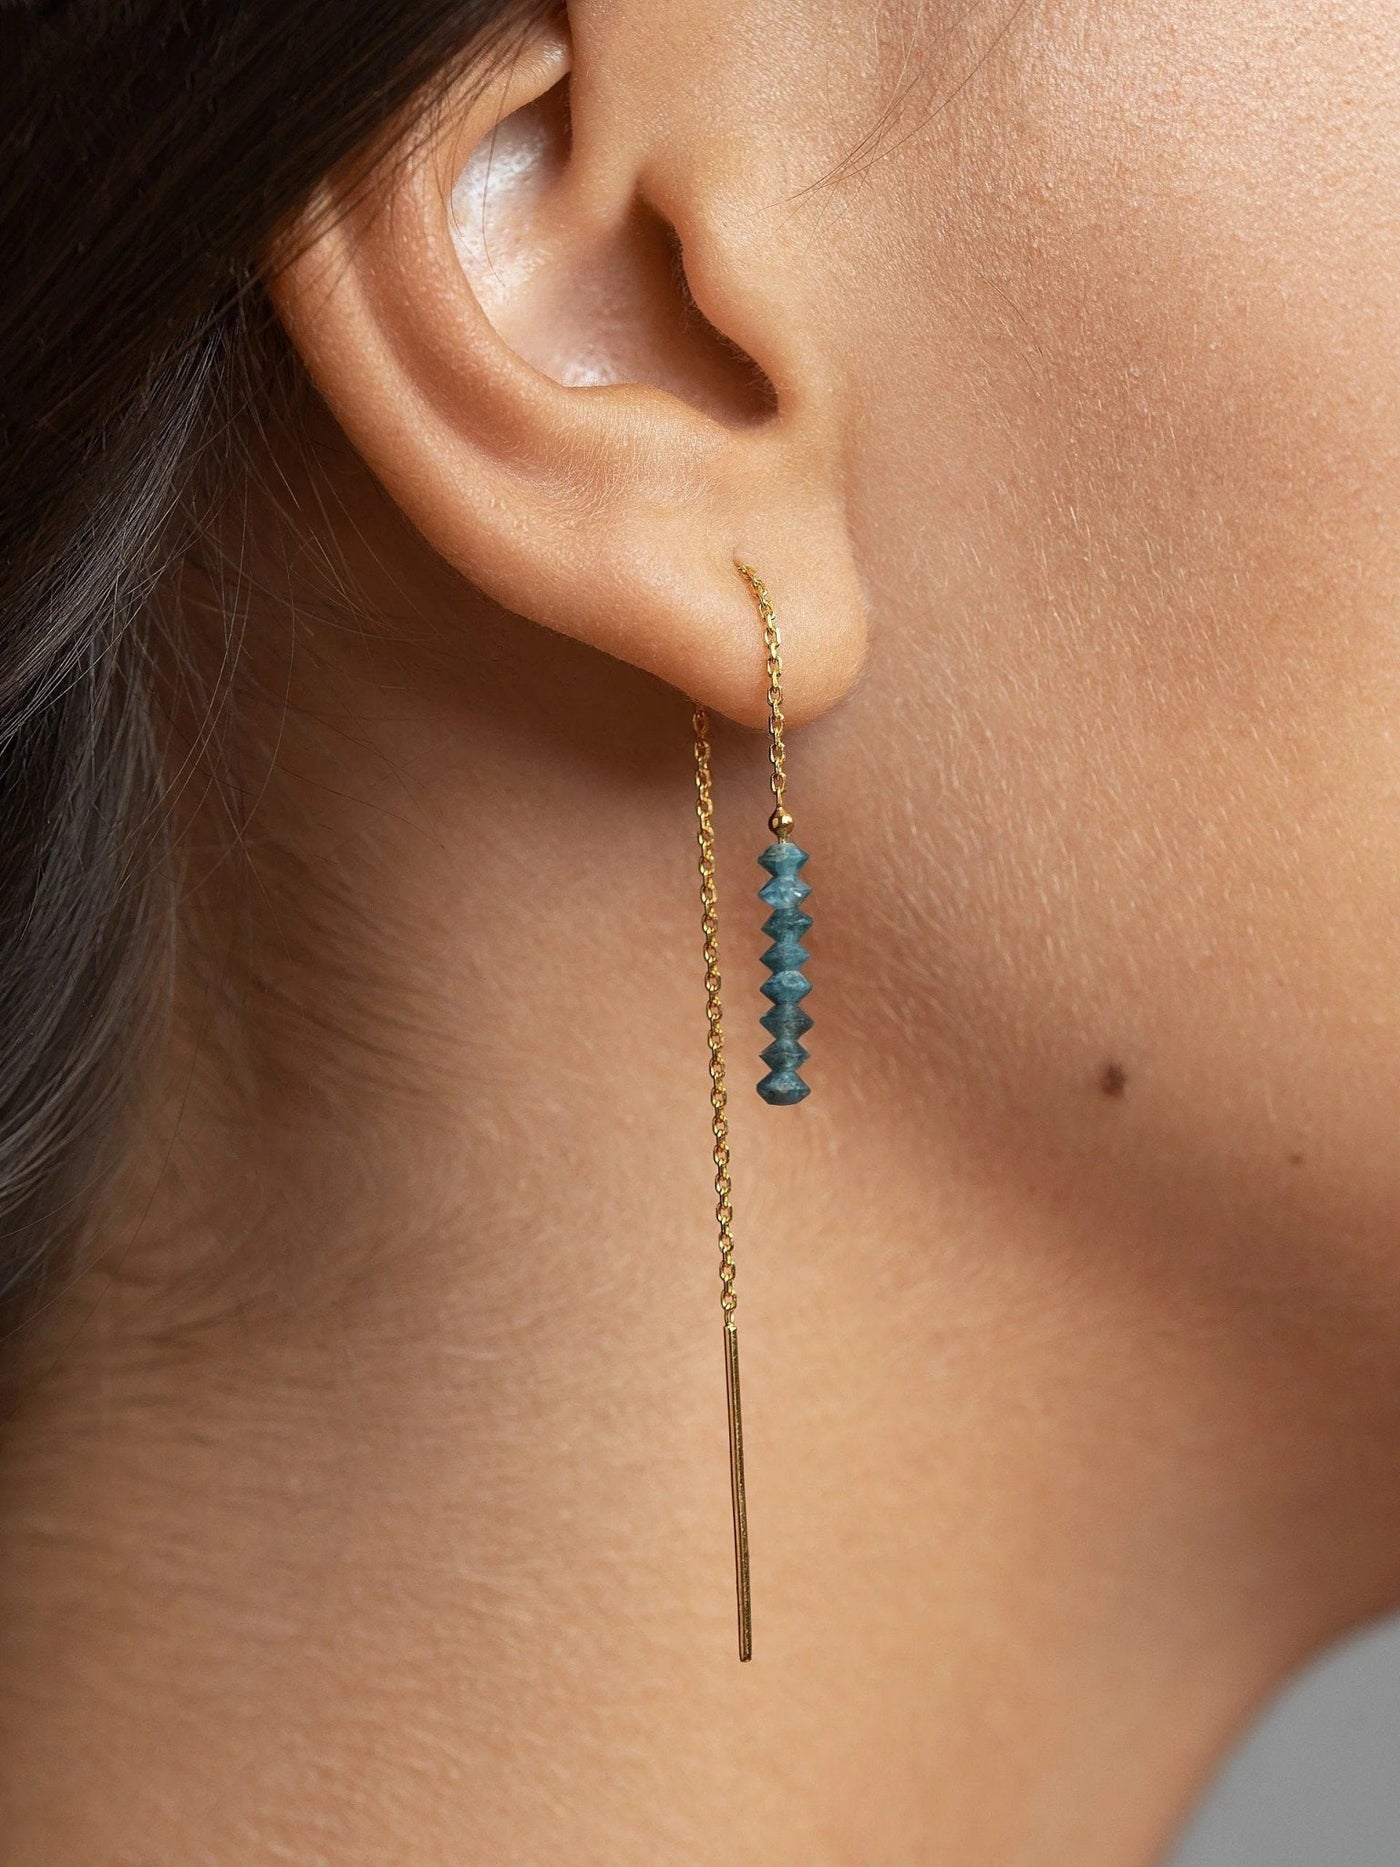 Sylene Chain Earring Natural Stone - 1. Amazonite80MMamazoniteapatite earringsLunai Jewelry